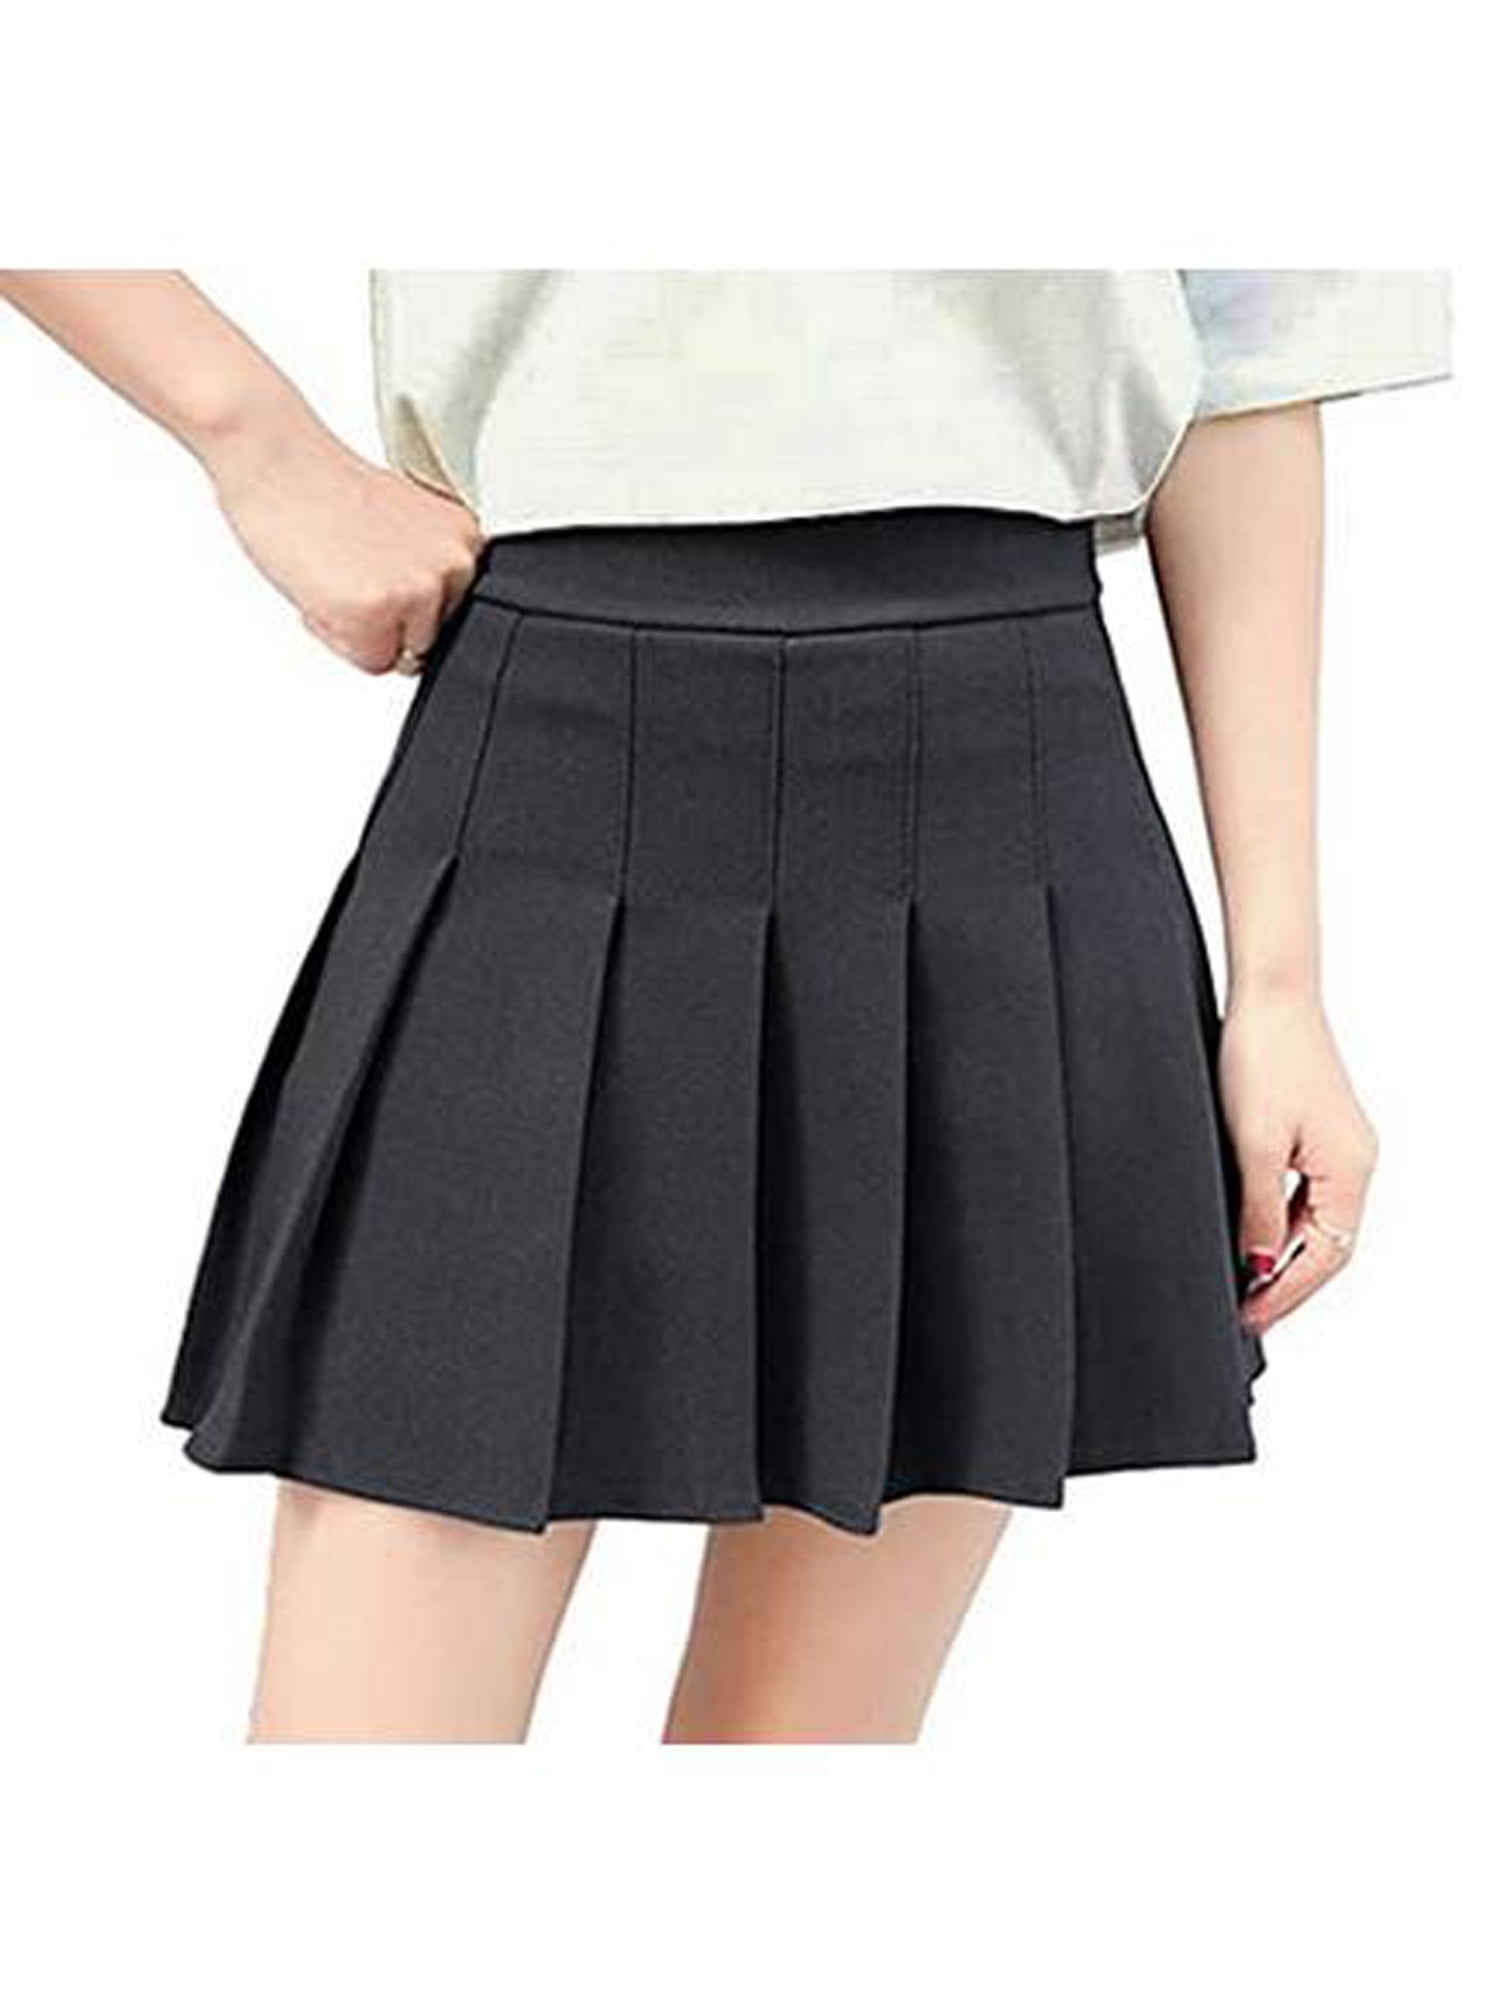 Women High Waist Tennis Dress Plain Skater Flare Pleated Short Mini Plaid Skirt 